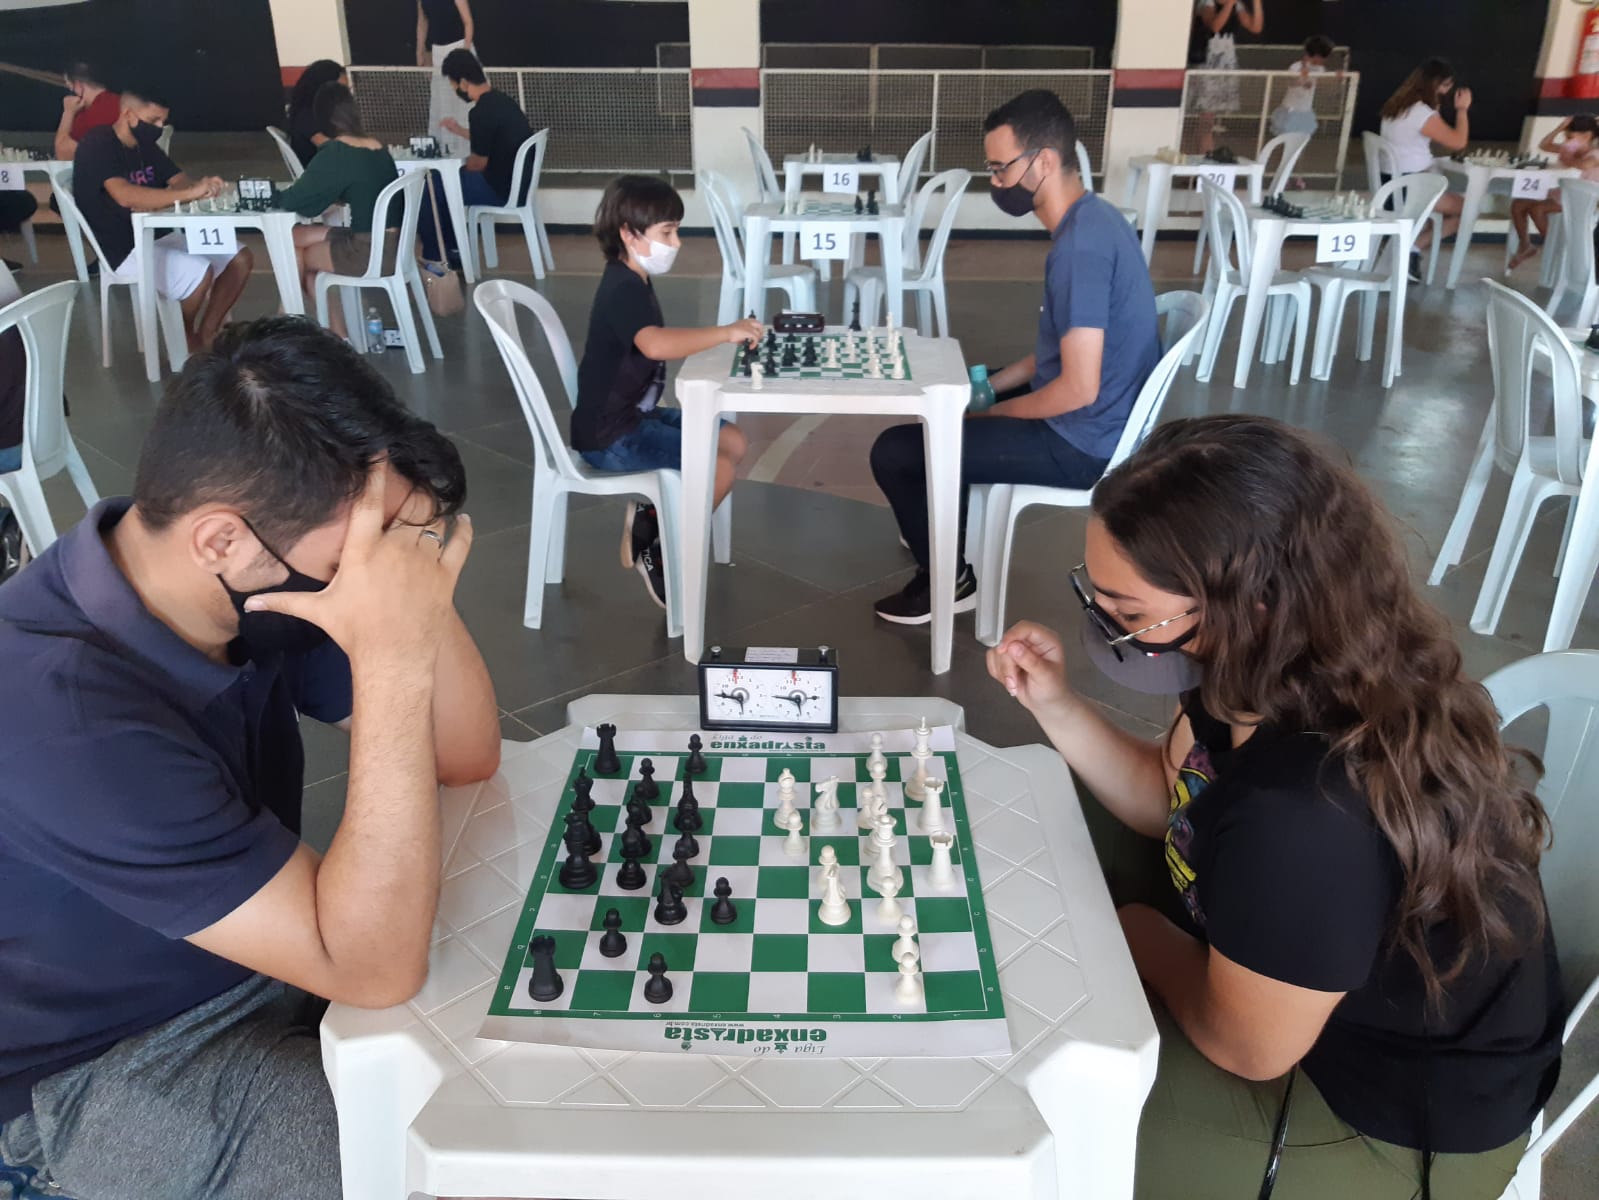 Campeonato de xadrez acontece neste sábado no Tupan Clube